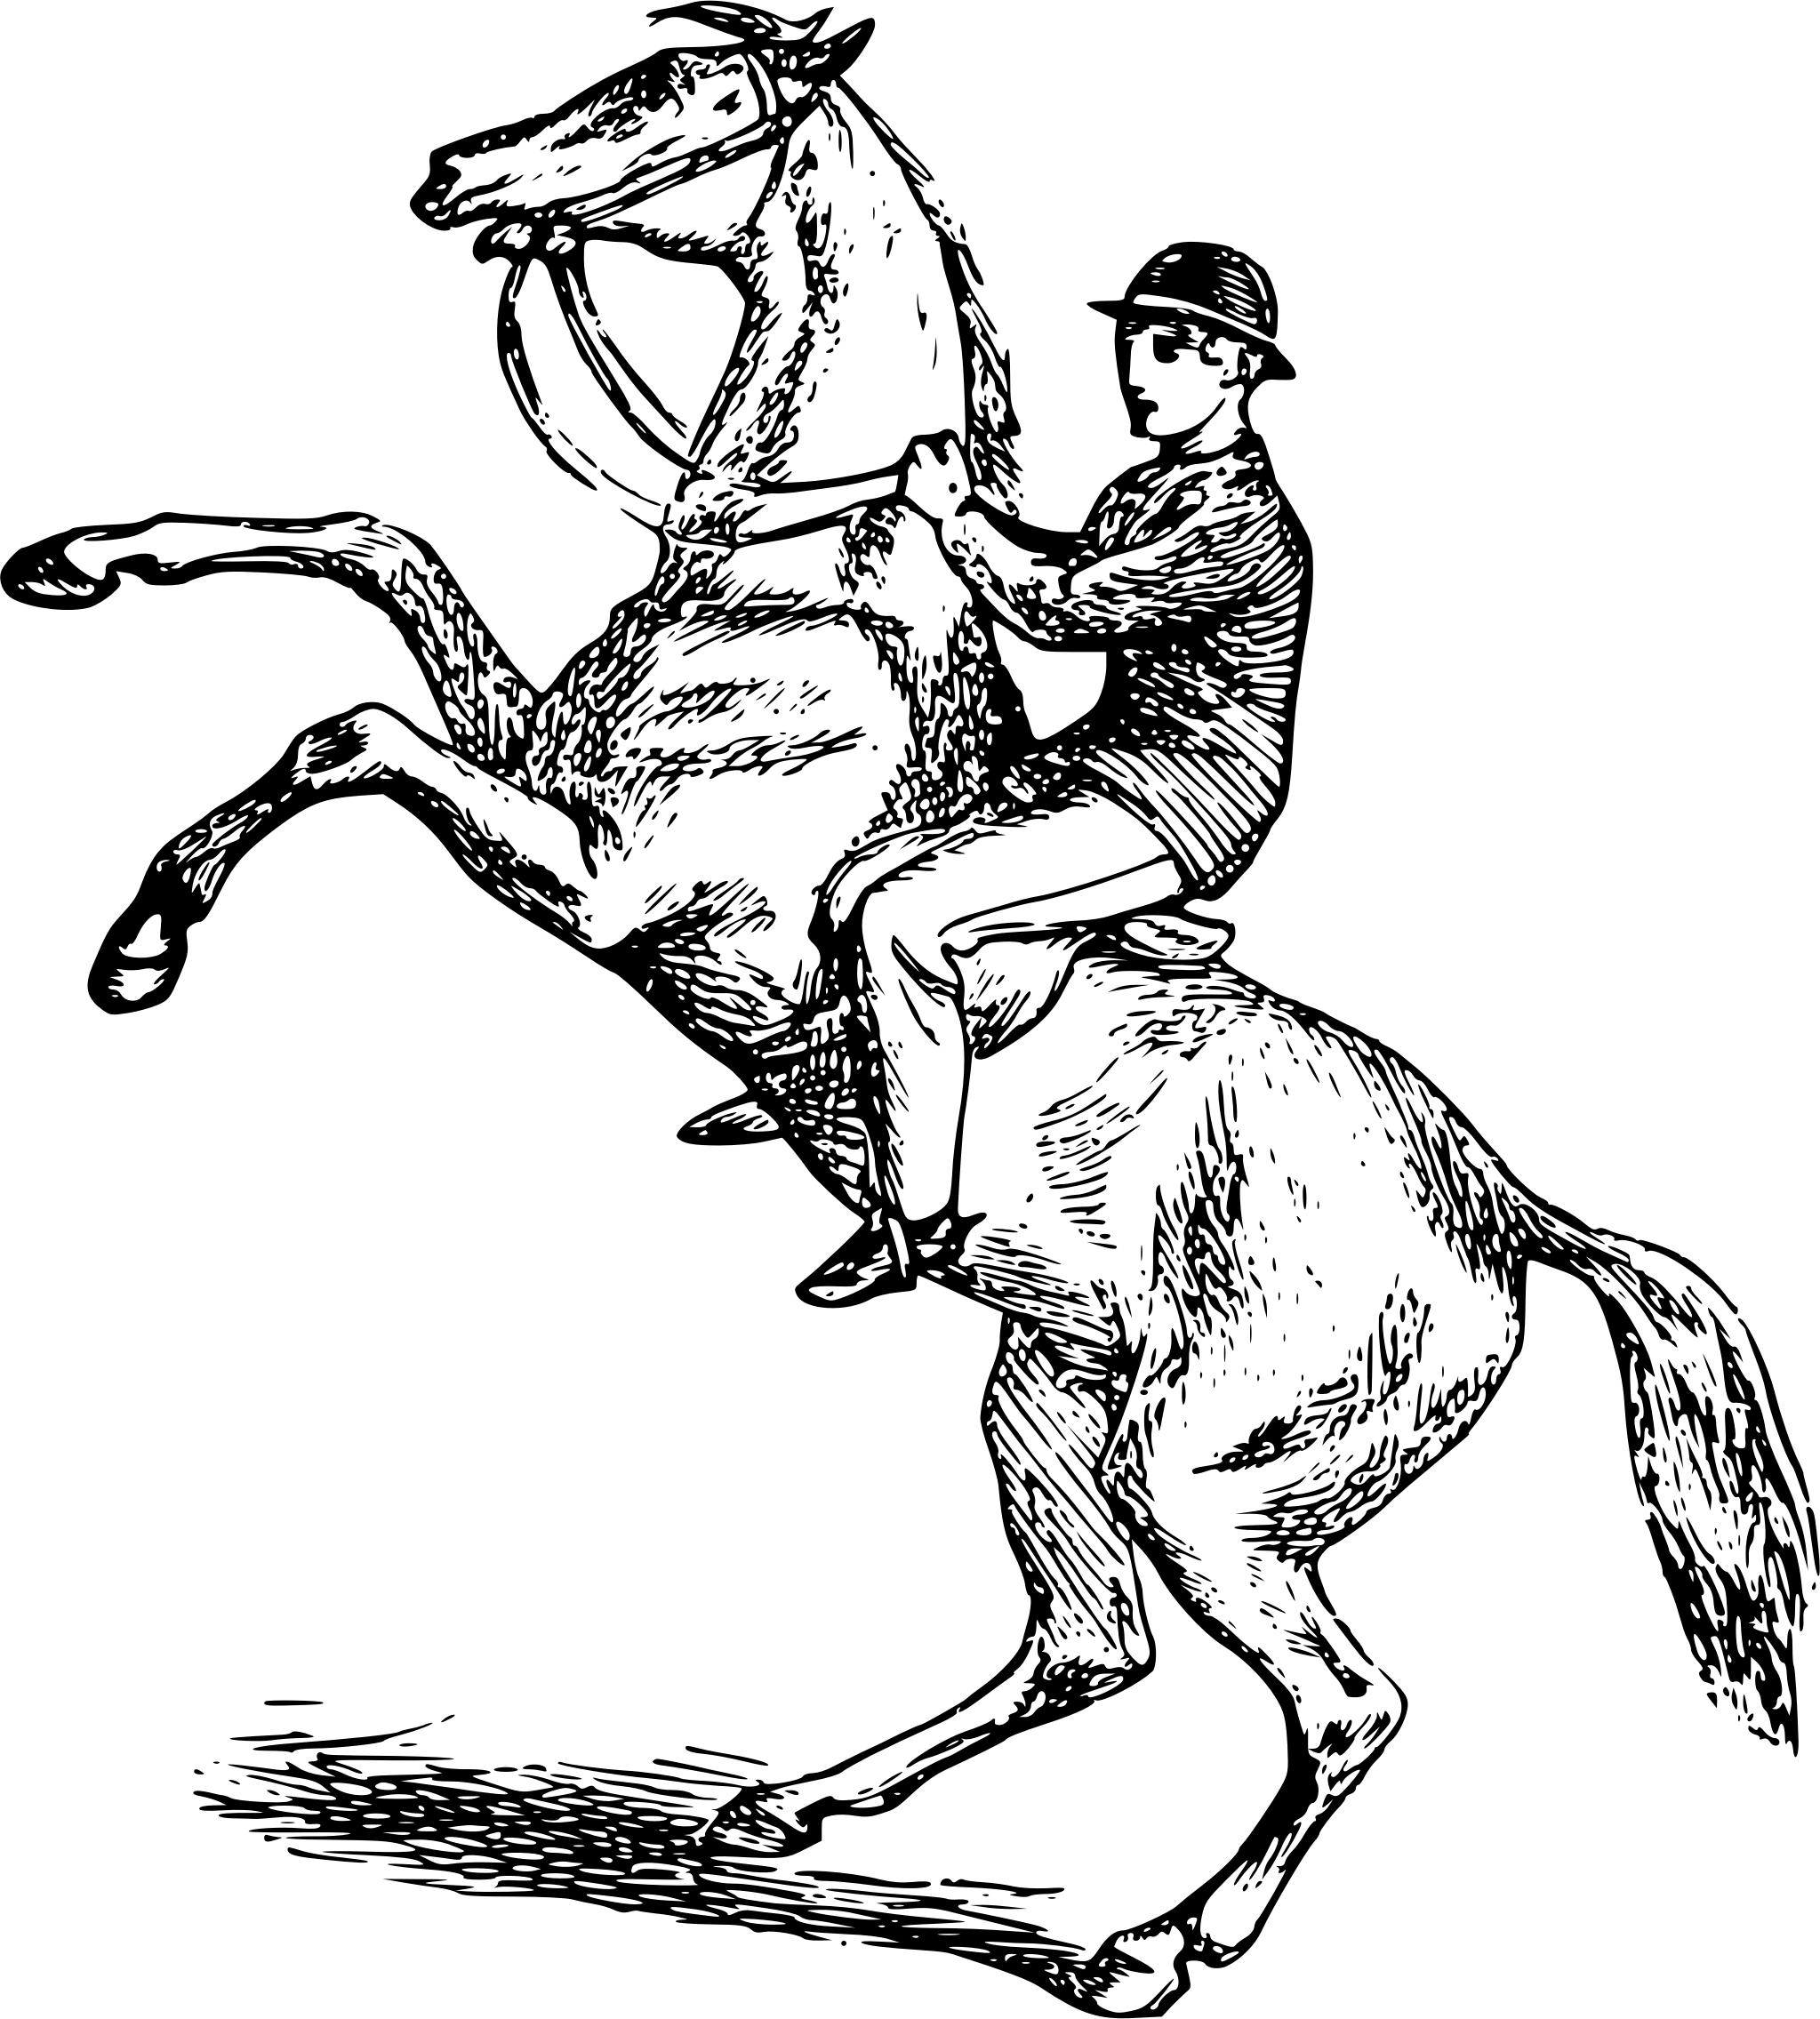 Man riding a rearing horse png